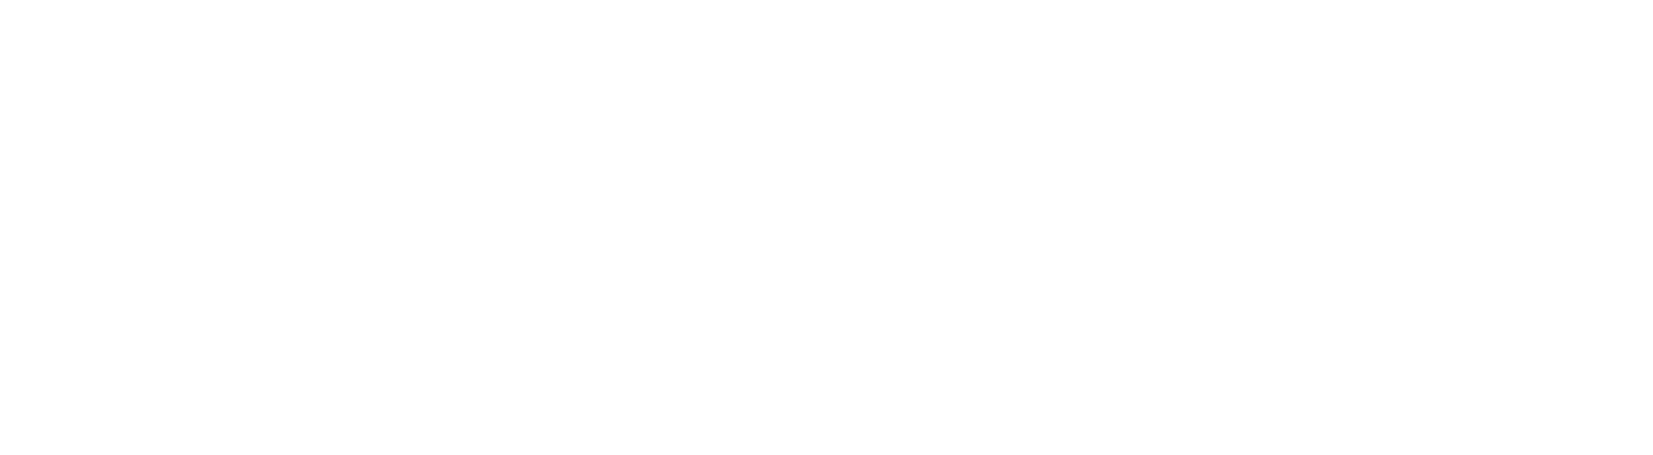 clerkenwell design week logo 